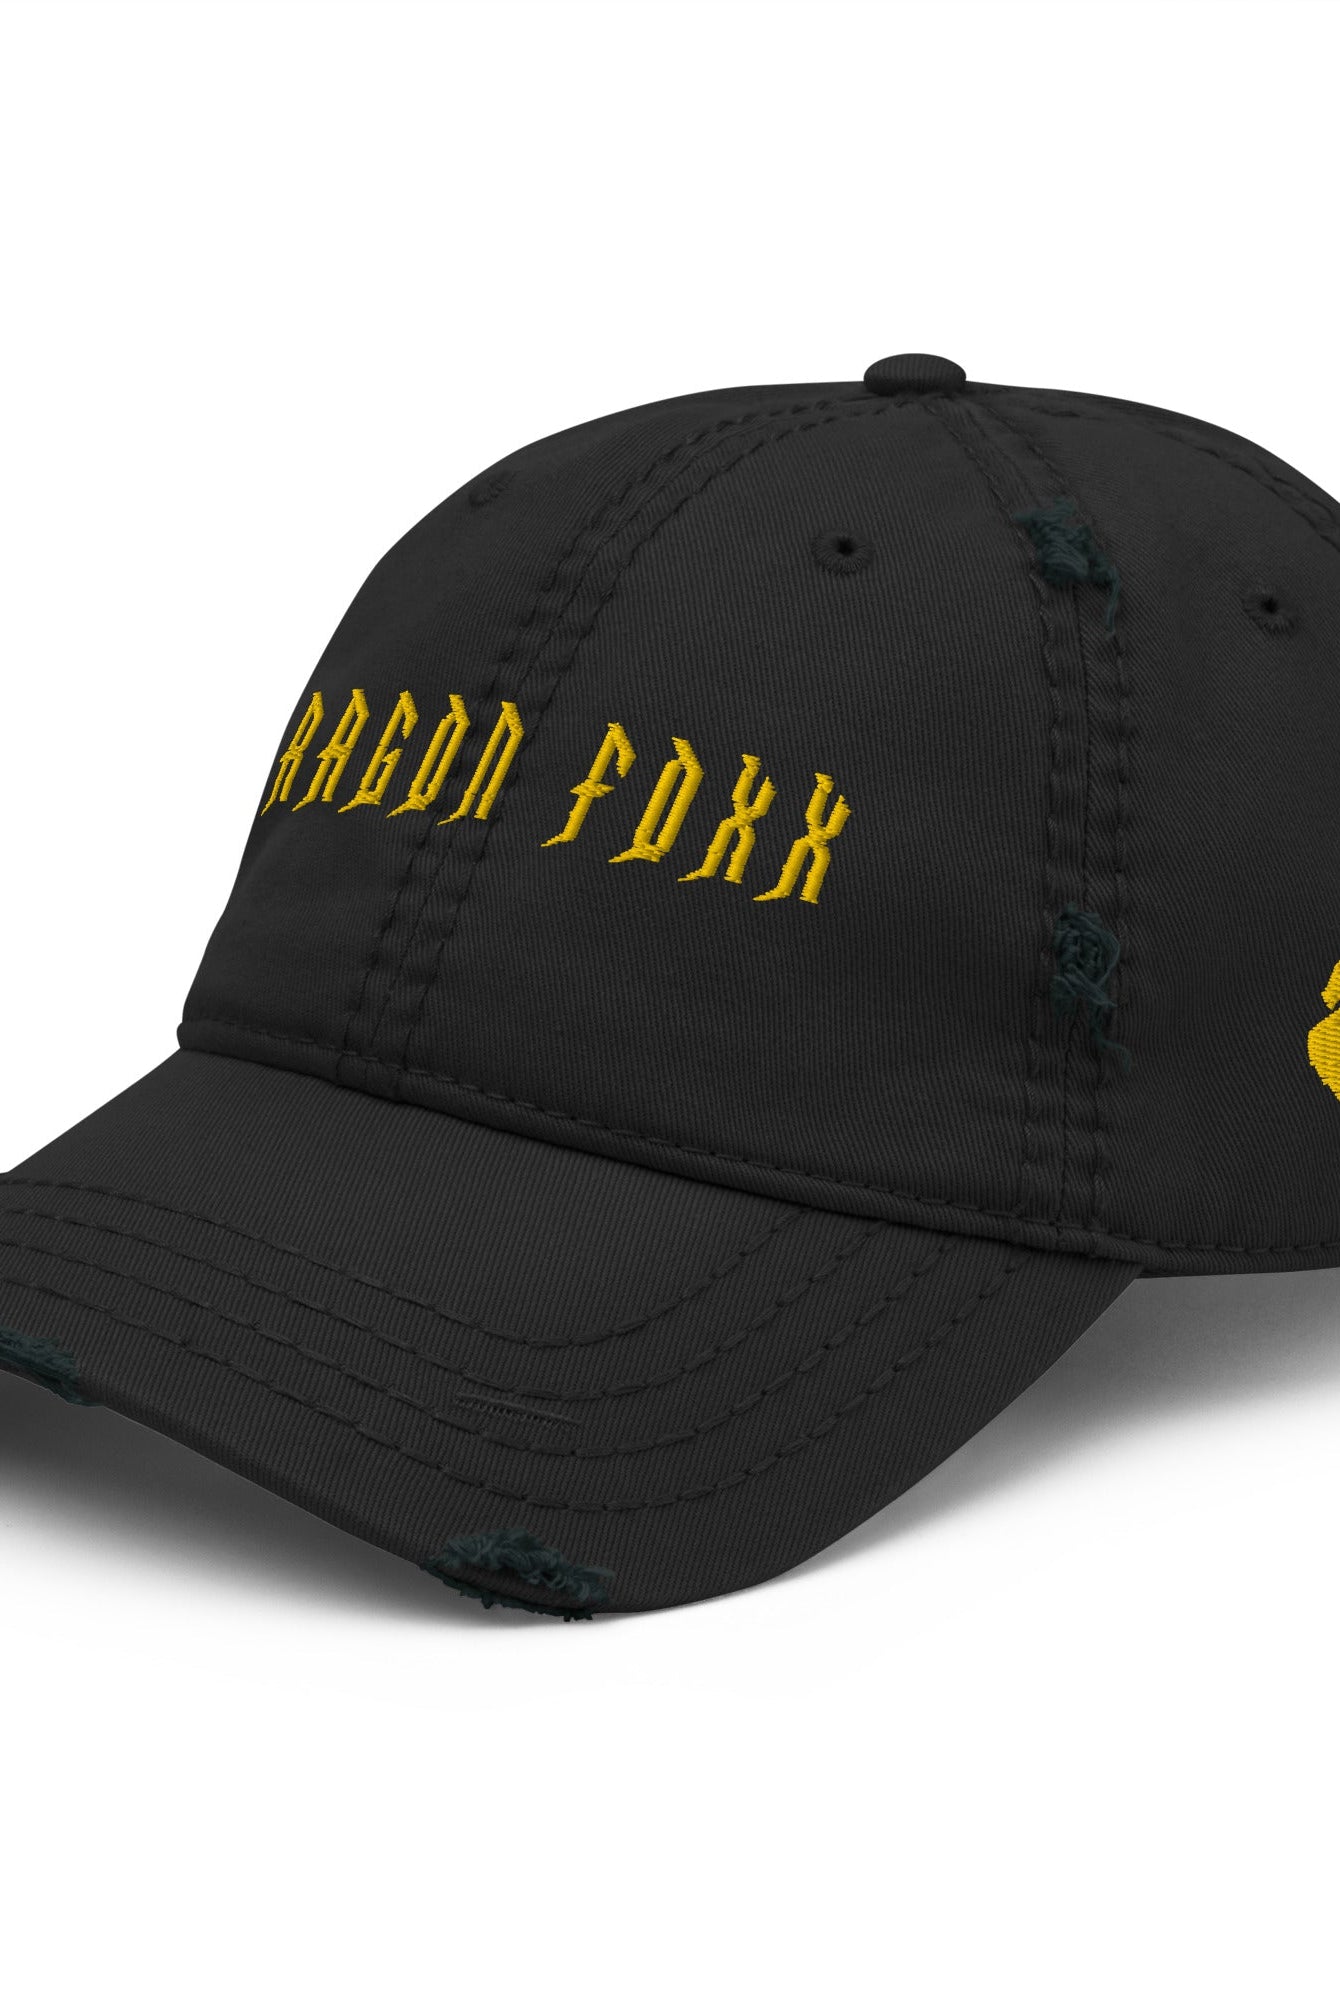 Dragon Foxx™ Black/Yellow Distressed Dad Hat - Distressed Dad Hat - DRAGON FOXX™ - Dragon Foxx™ Black/Yellow Distressed Dad Hat - 3304472_10990 - One Size - Black - Accessories - Black Distressed Hat - Black/Yellow Distressed Dad Hat